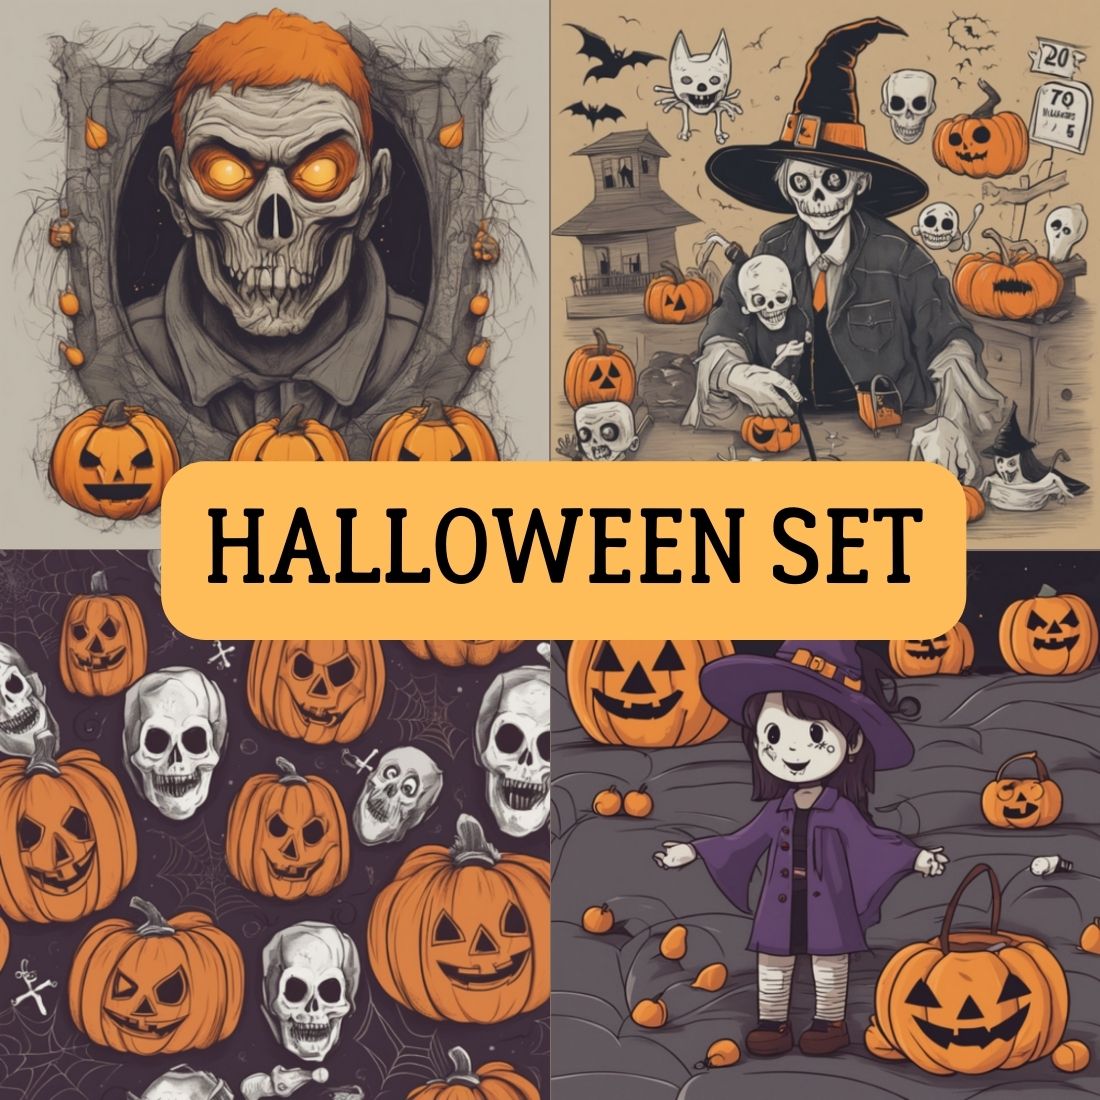 Halloween set cover image.